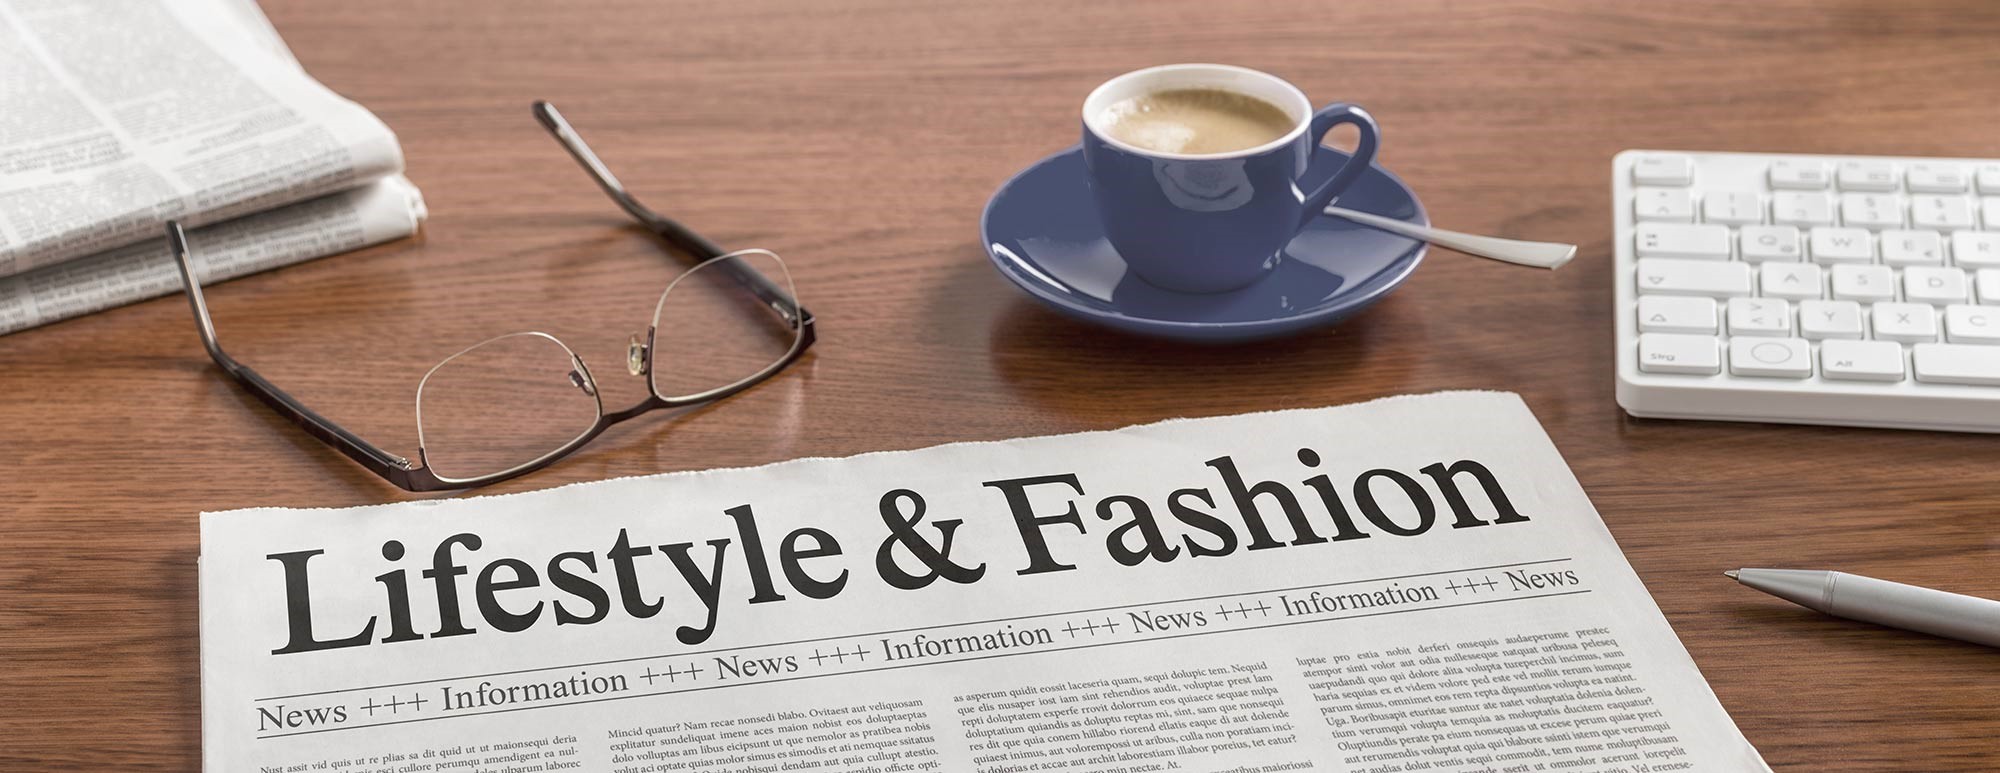 Periódico "Lifestyle & Fashion" sobre mesa de trabajo 